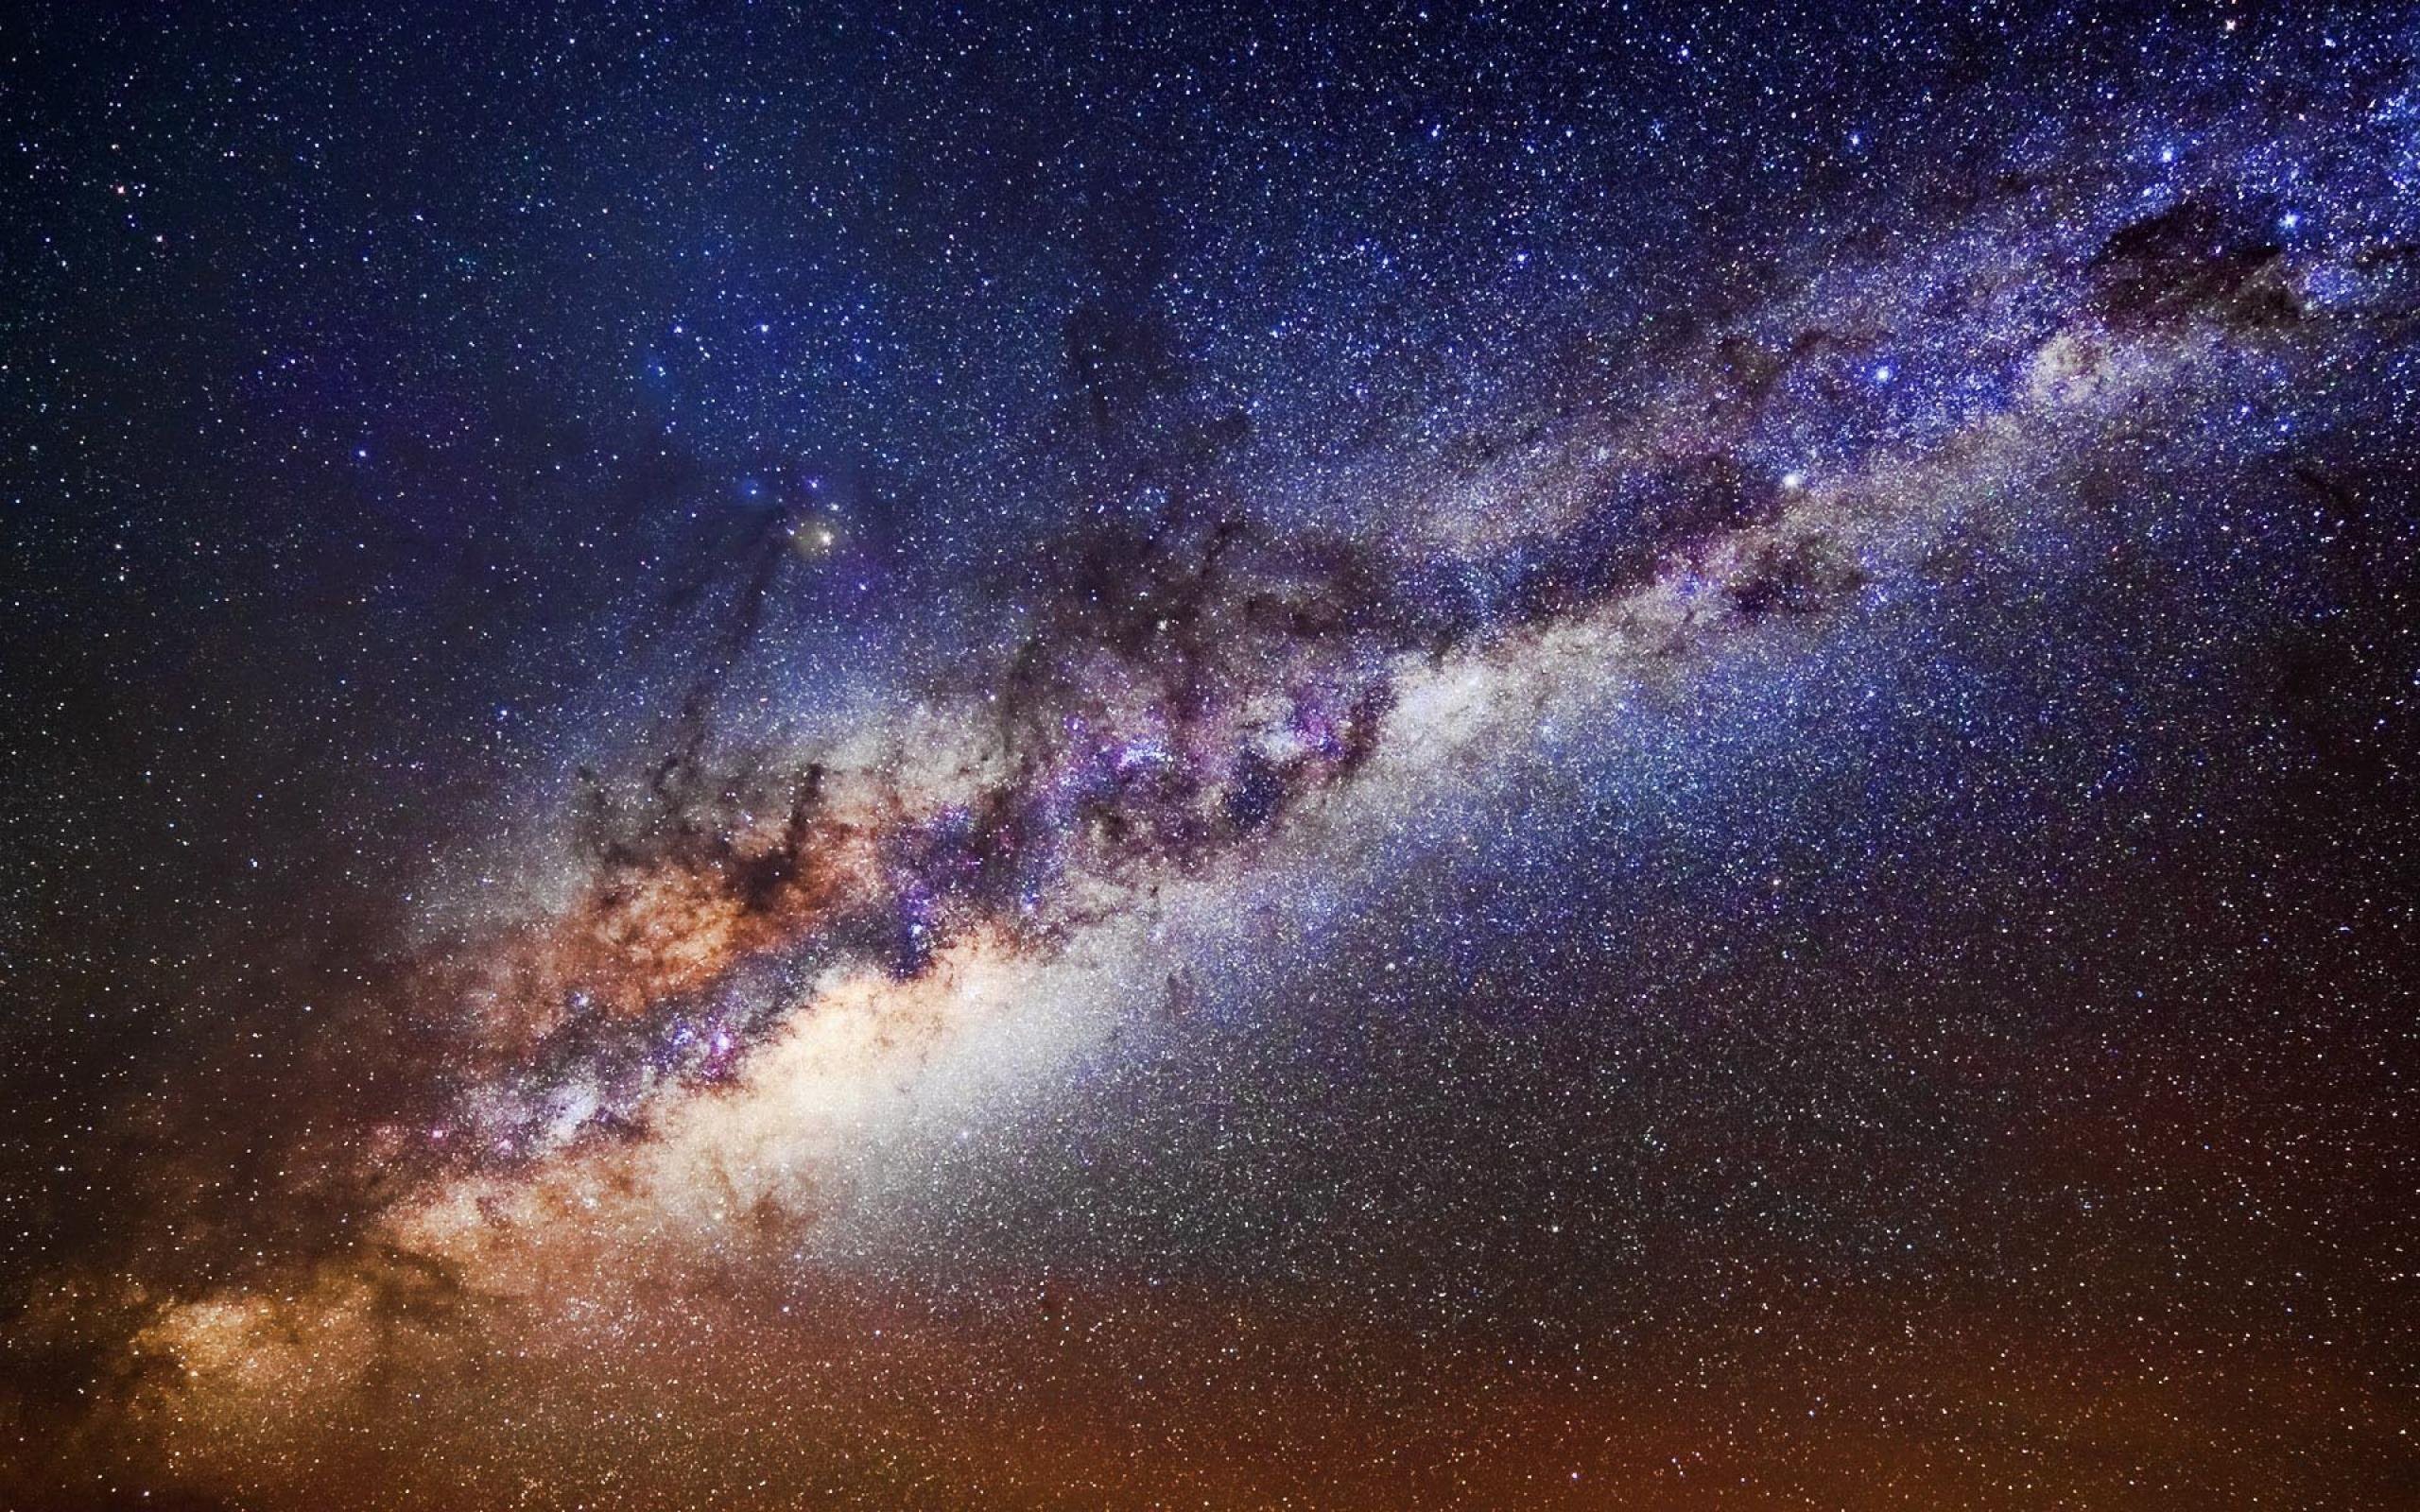 Astronomy wallpaper ·① Download free stunning wallpapers for desktop